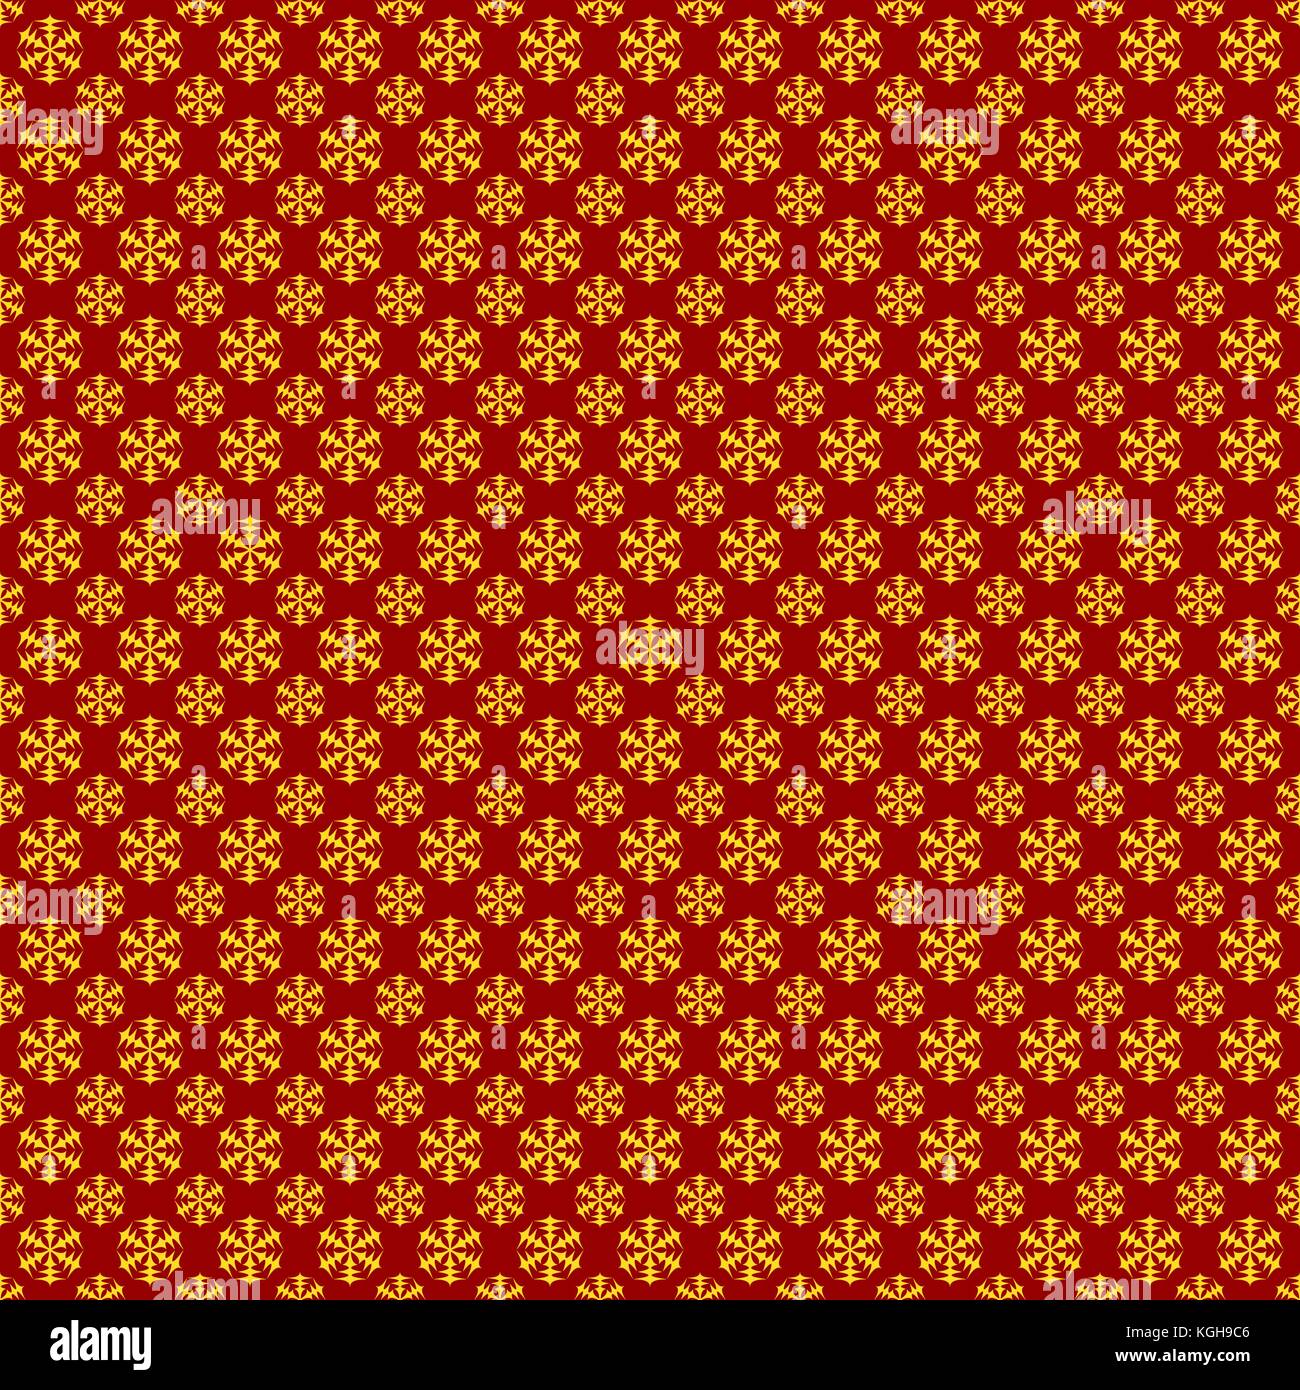 Seamless geometric snowflake pattern wallpaper - vector Christmas decoration background design Stock Vector